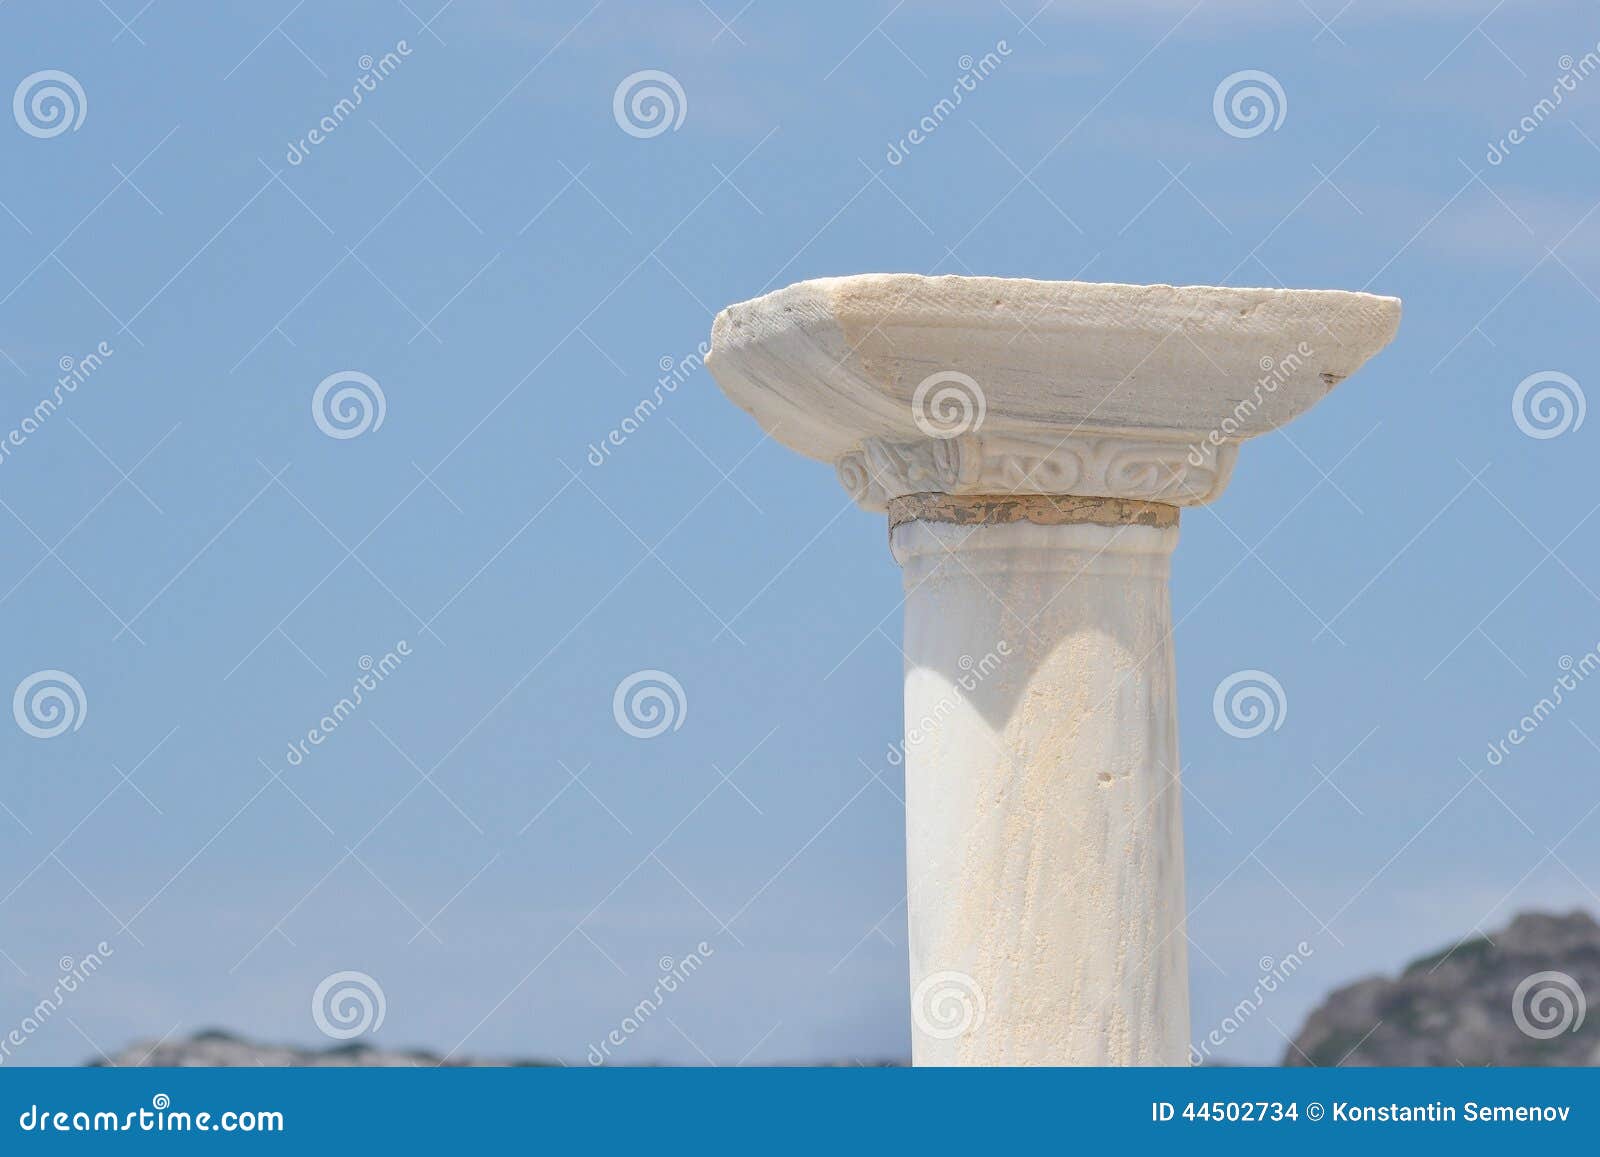 capitel of column on blue sky background.